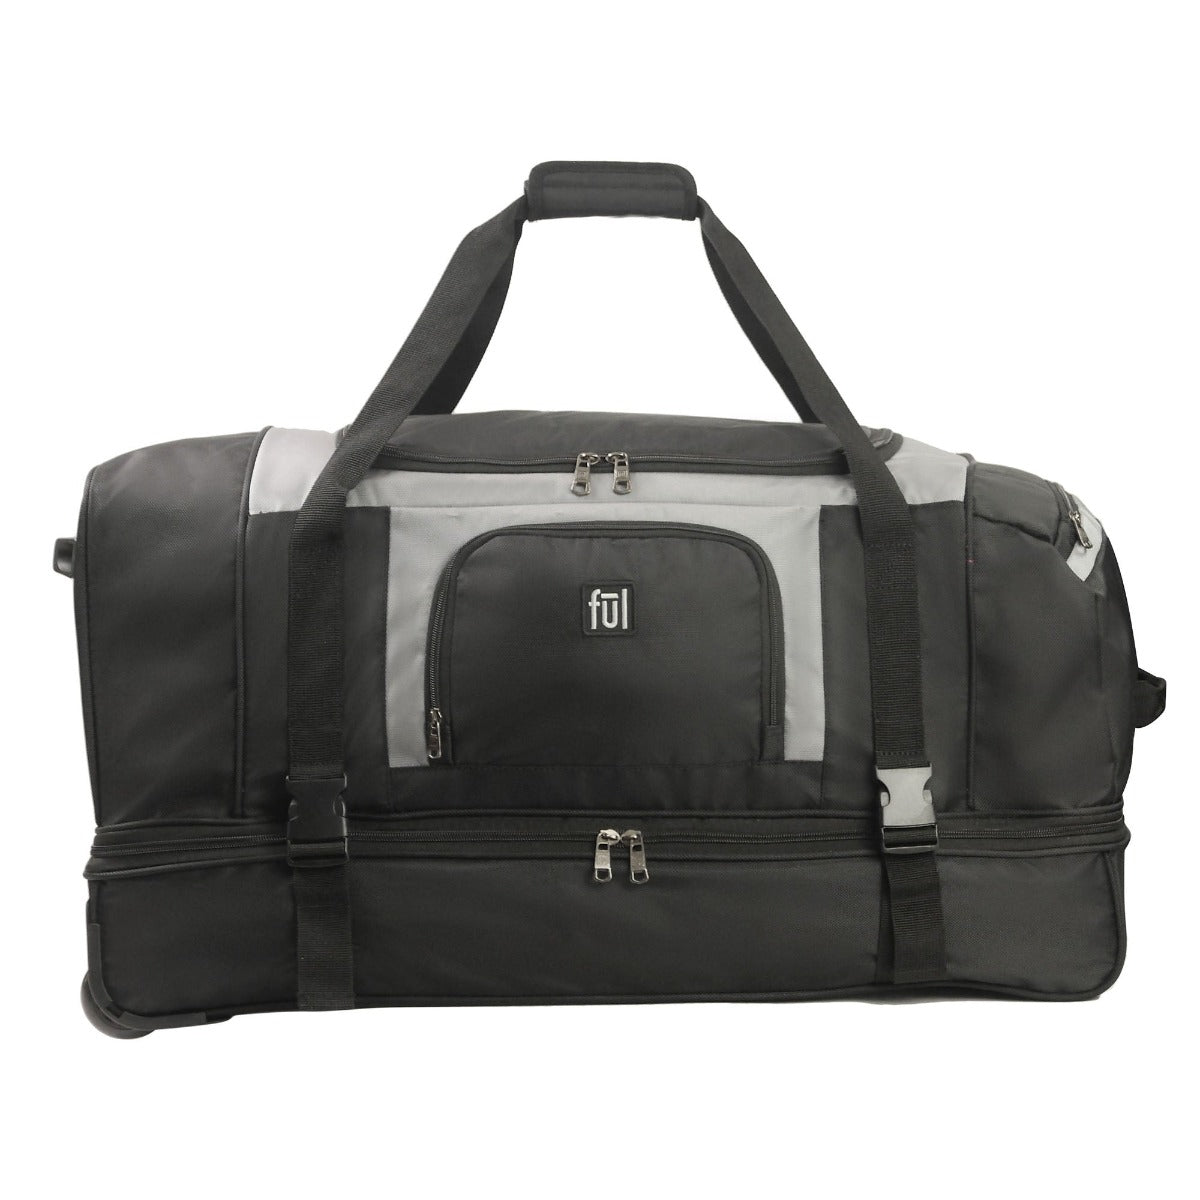 Rig Series 30" Split Level Ful Wheeled Rolling Duffel Travel Bag Black